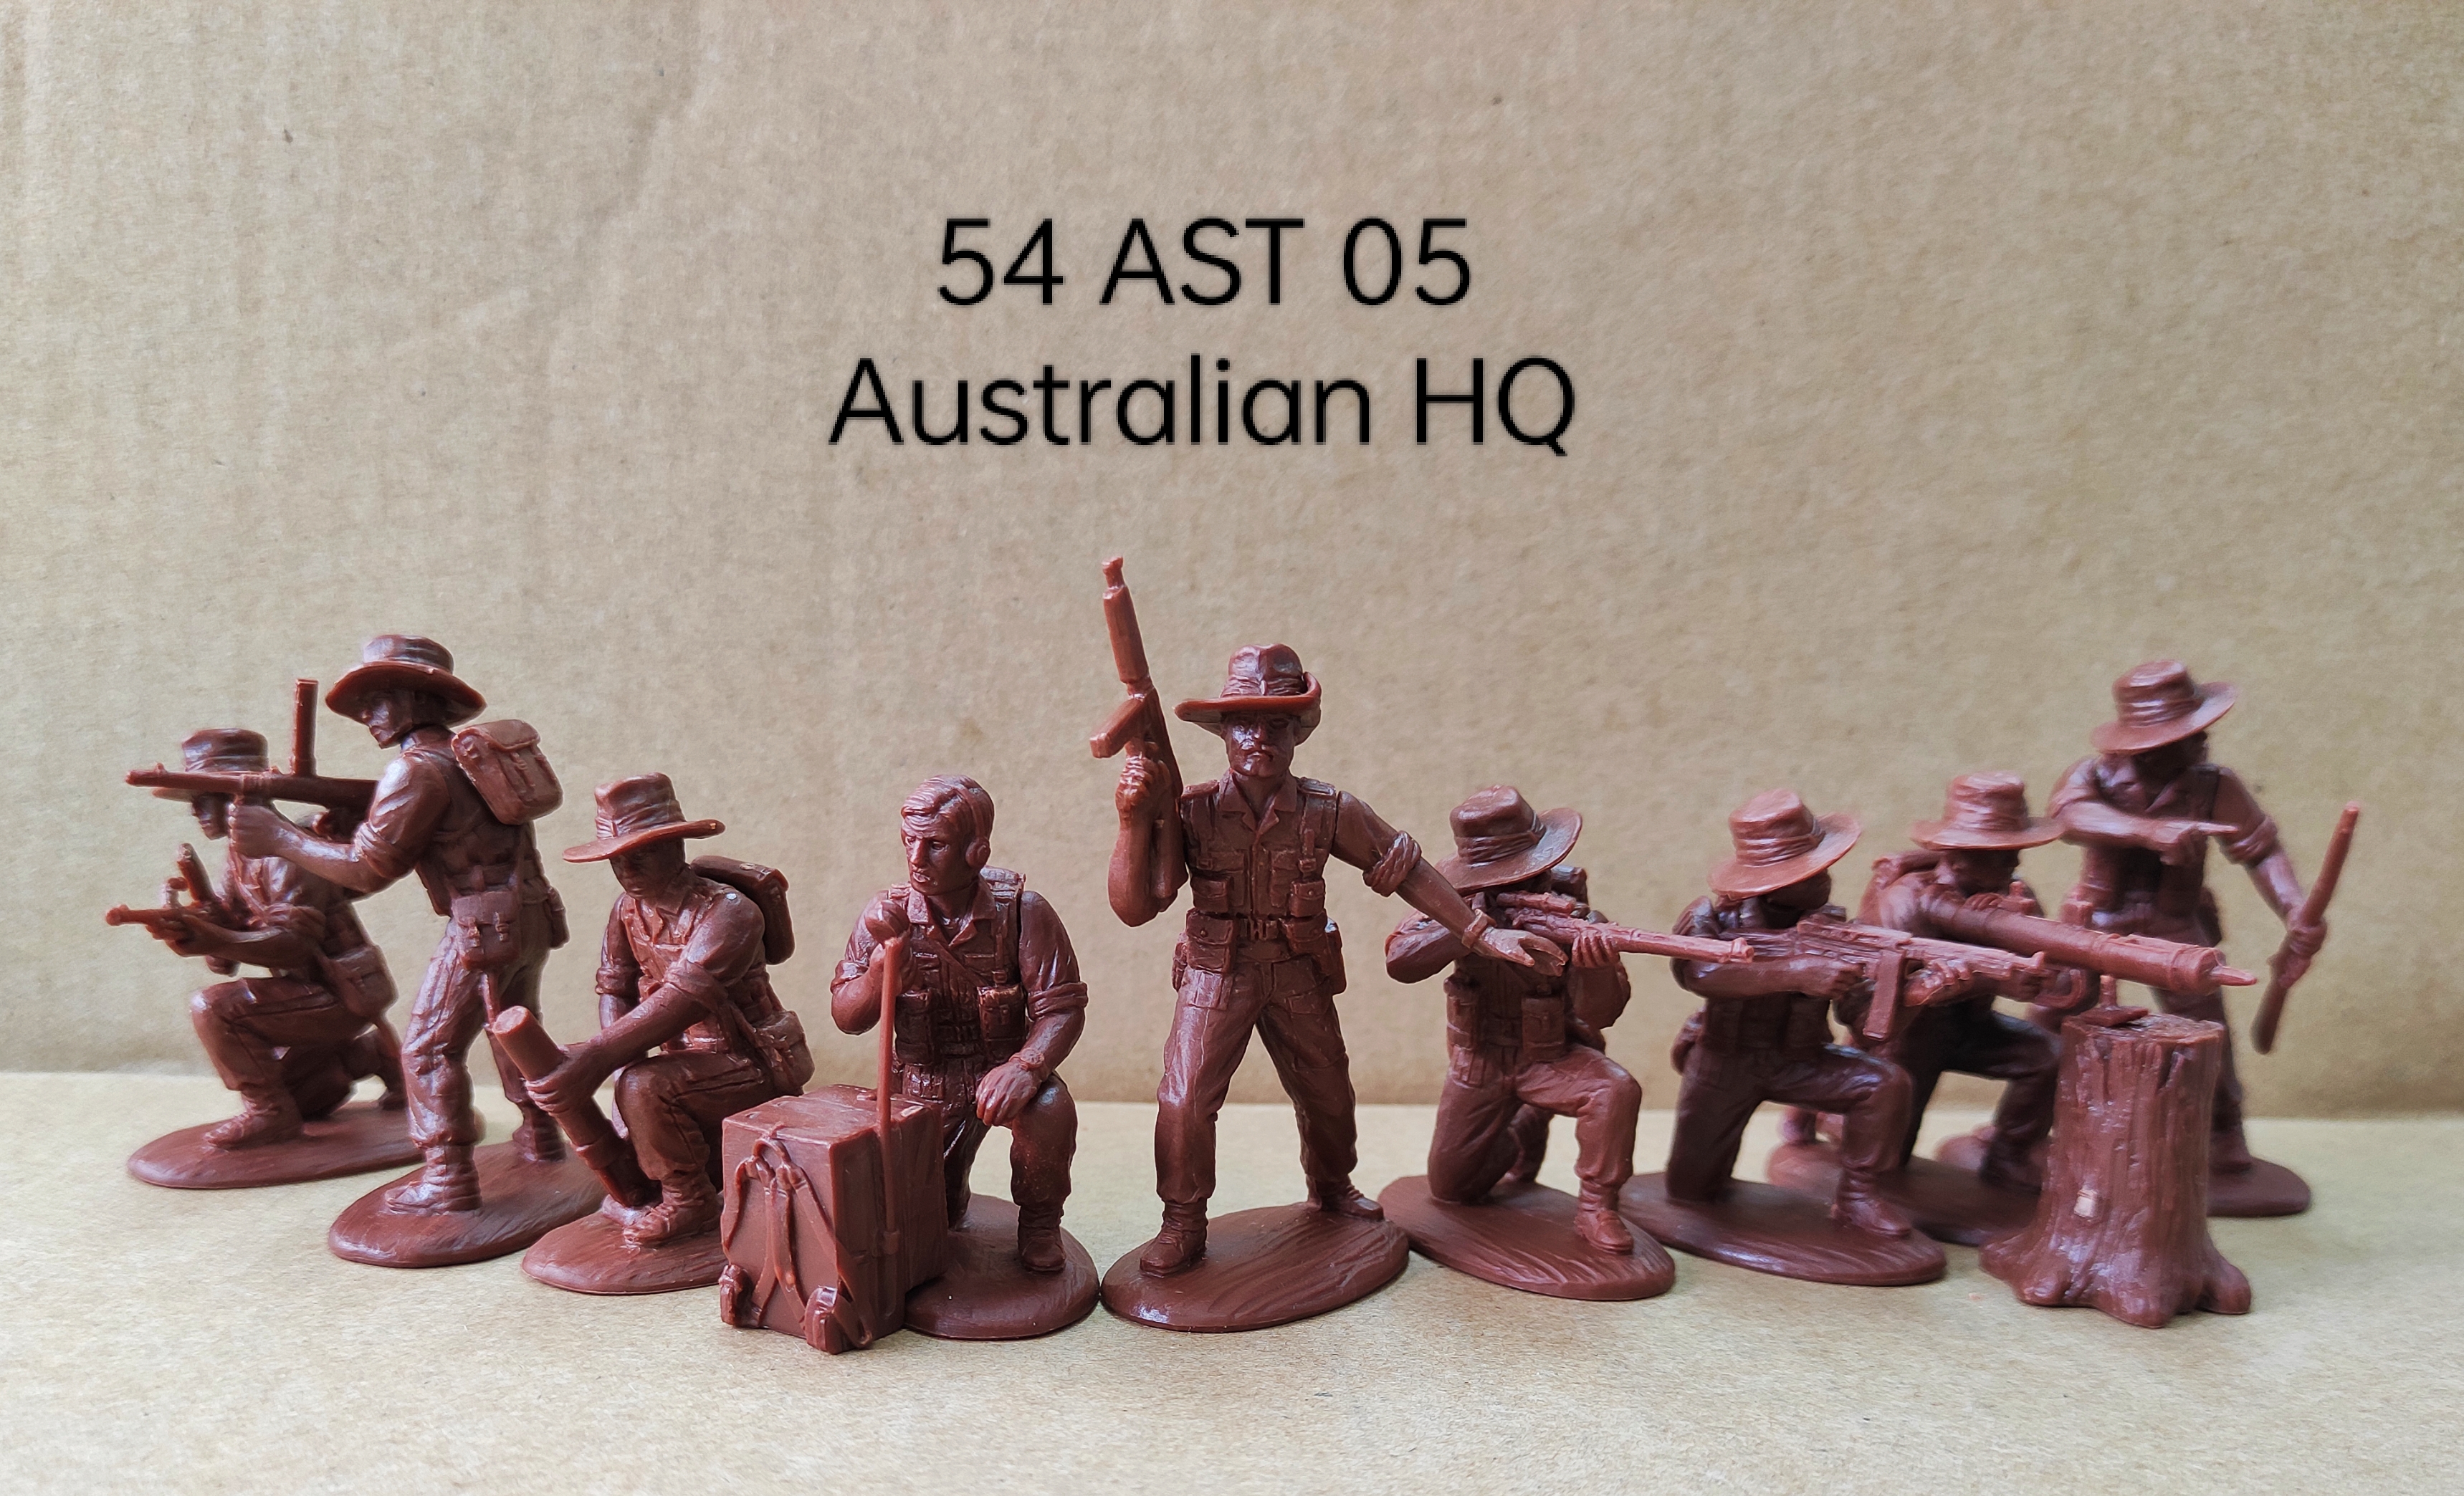 54 AST 05 Australian HQ